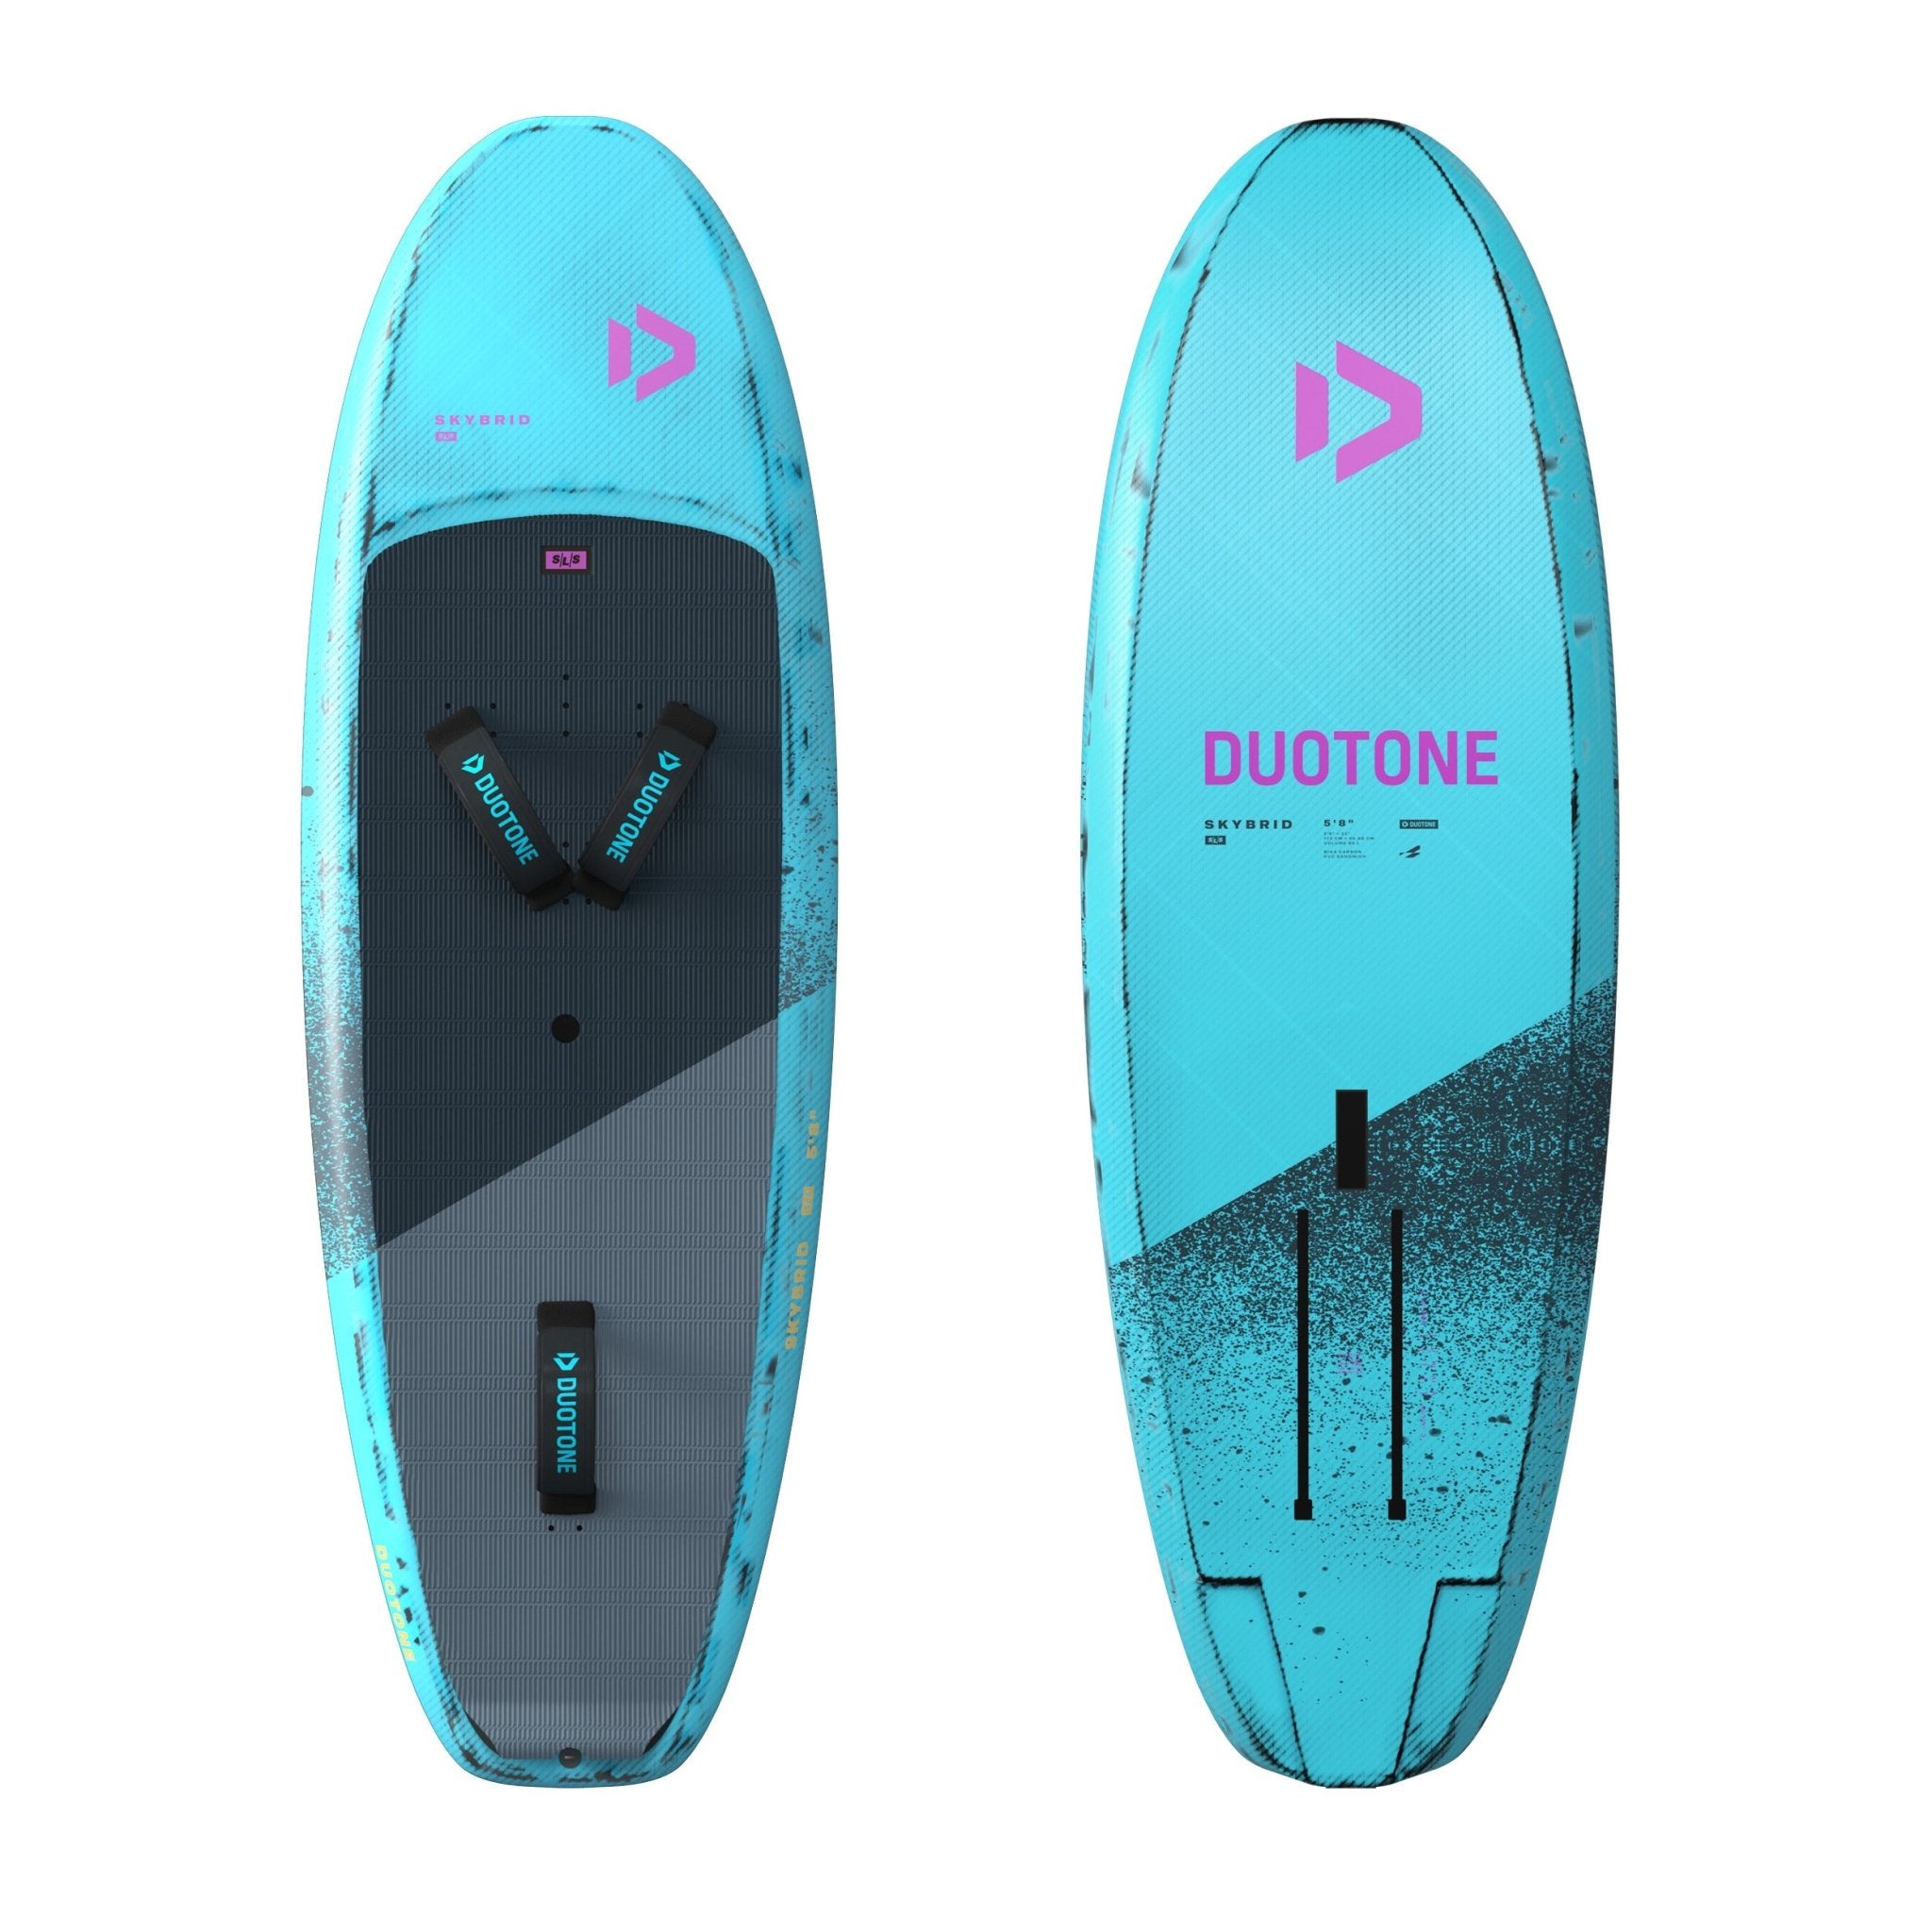 Duotone Foilboard Skybrid SLS 2025 - Worthing Watersports - 9010583242361 - Boards - Duotone X